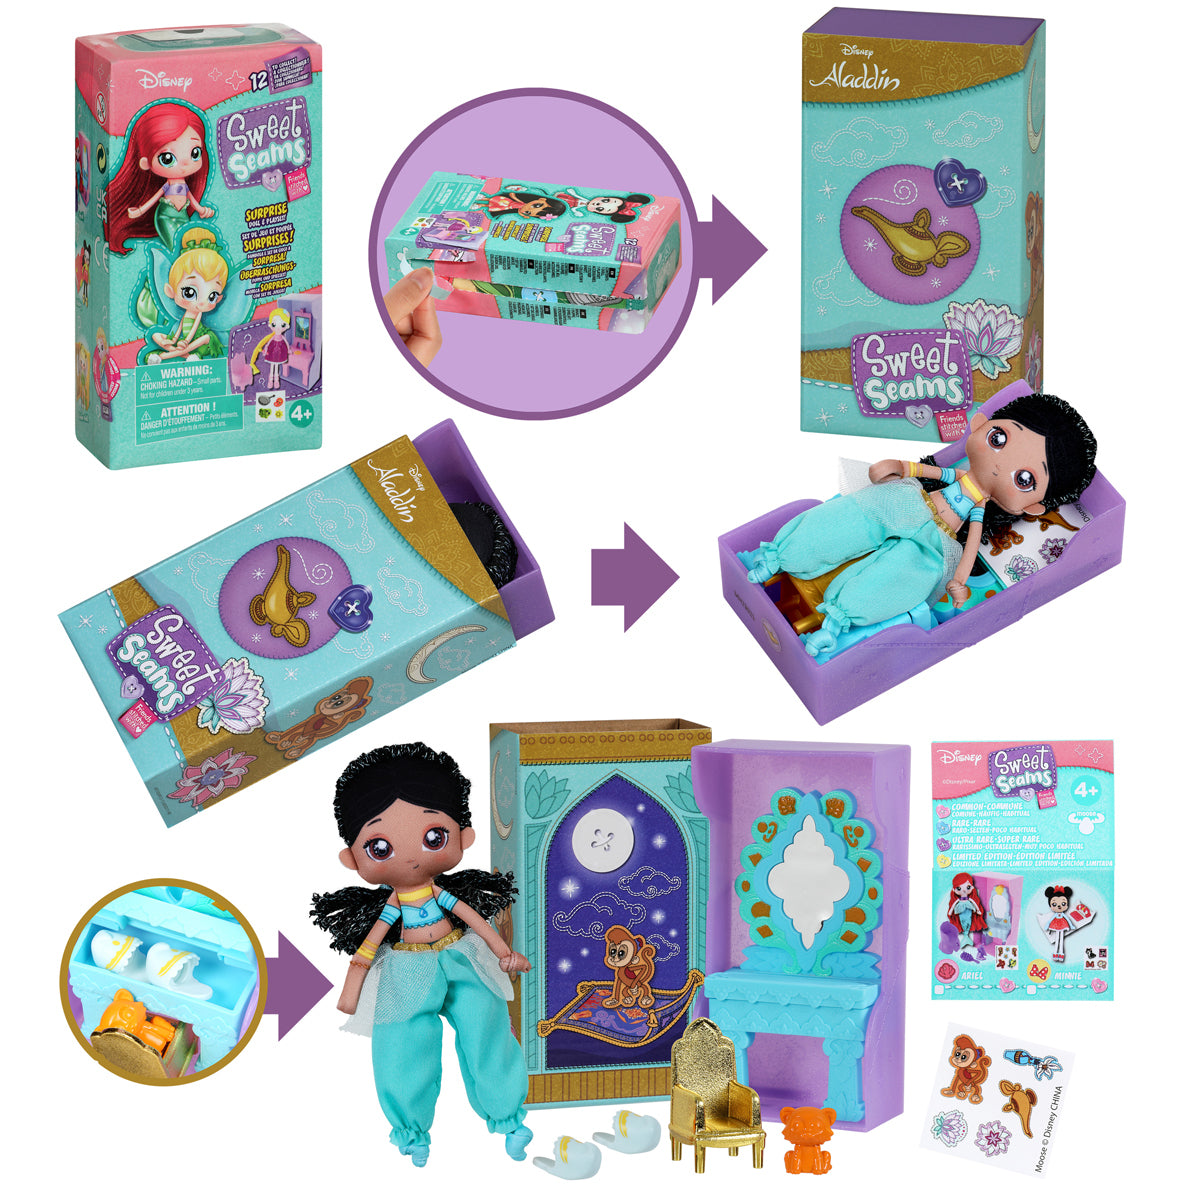 Disney Sweet Seams Deluxe Doll Pack - Disney Frozen Anna's Ice